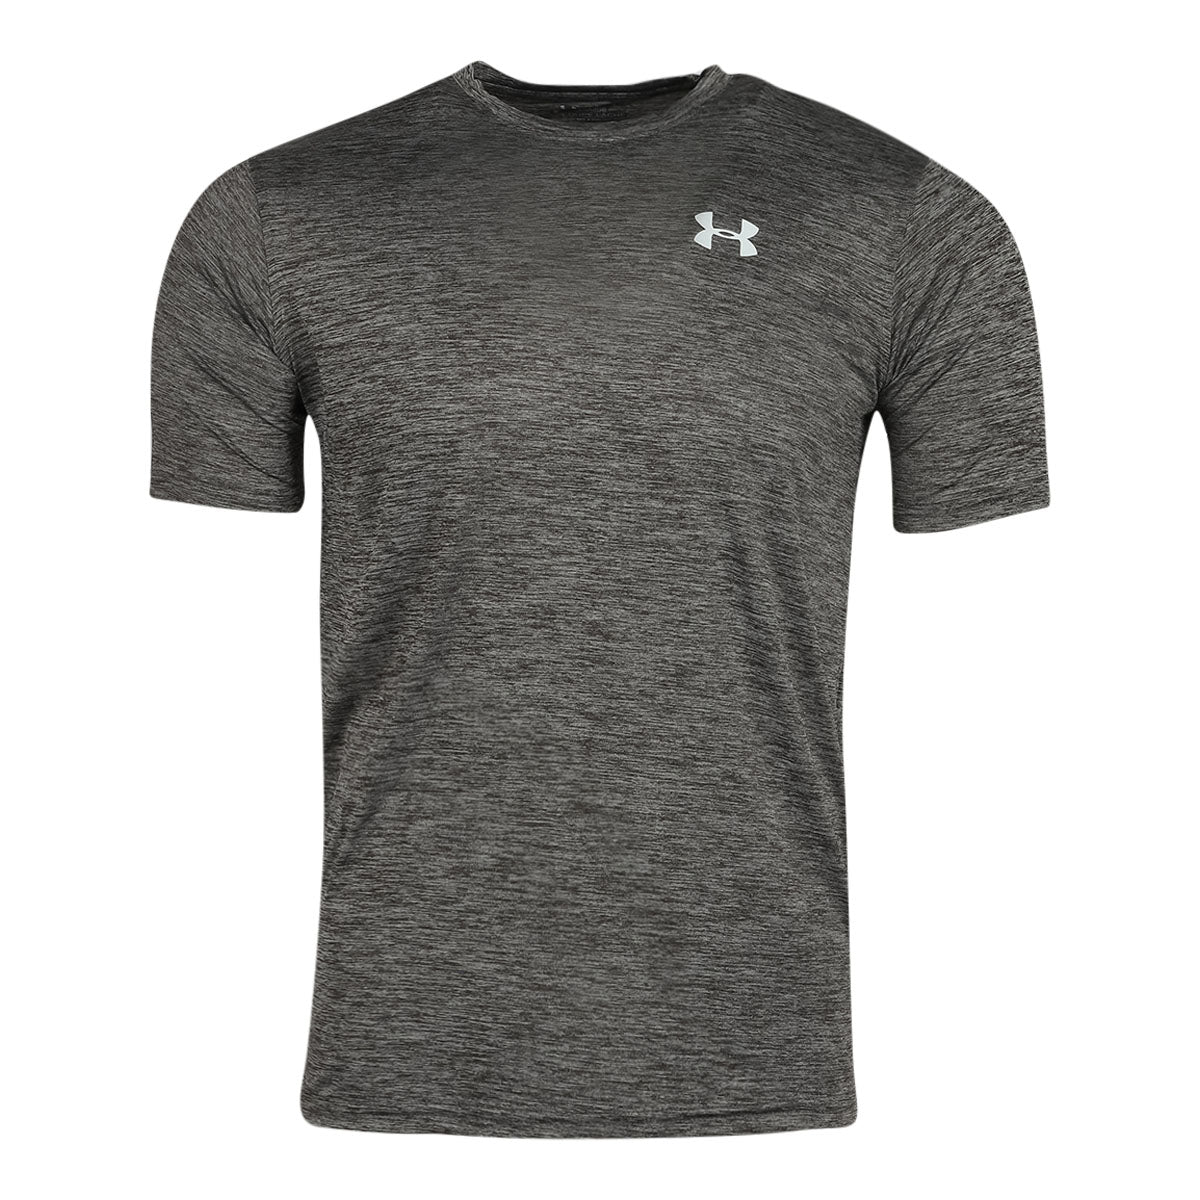 Image of Under Armour Men's UA Tech Short Sleeve T-Shirt